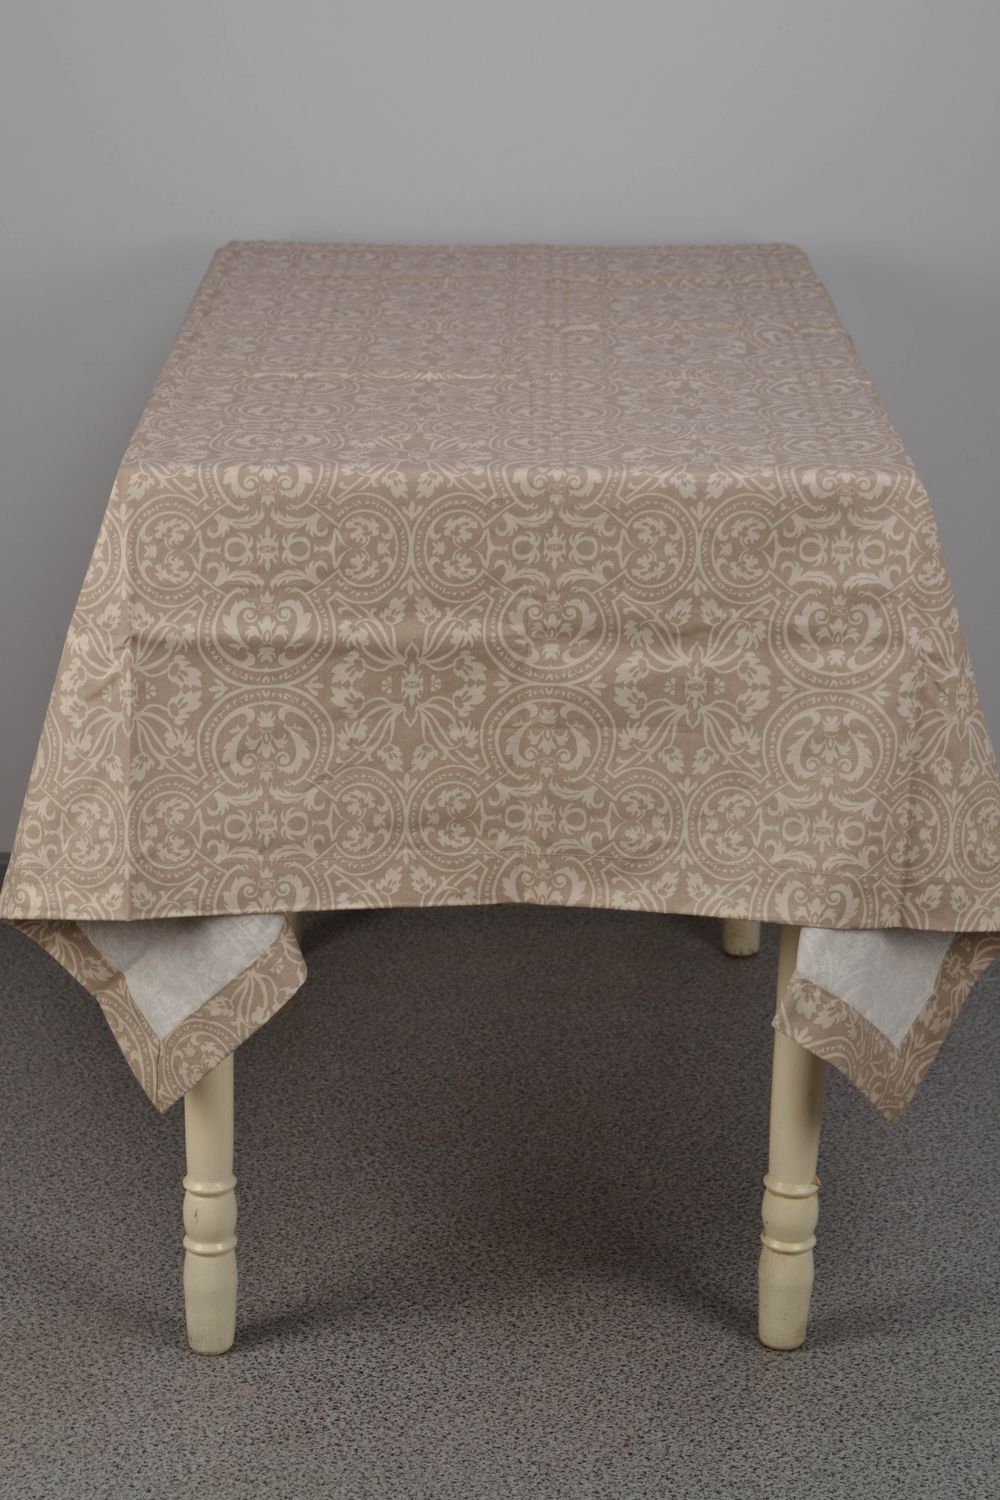 Cotton tablecloth for rectangular table photo 2